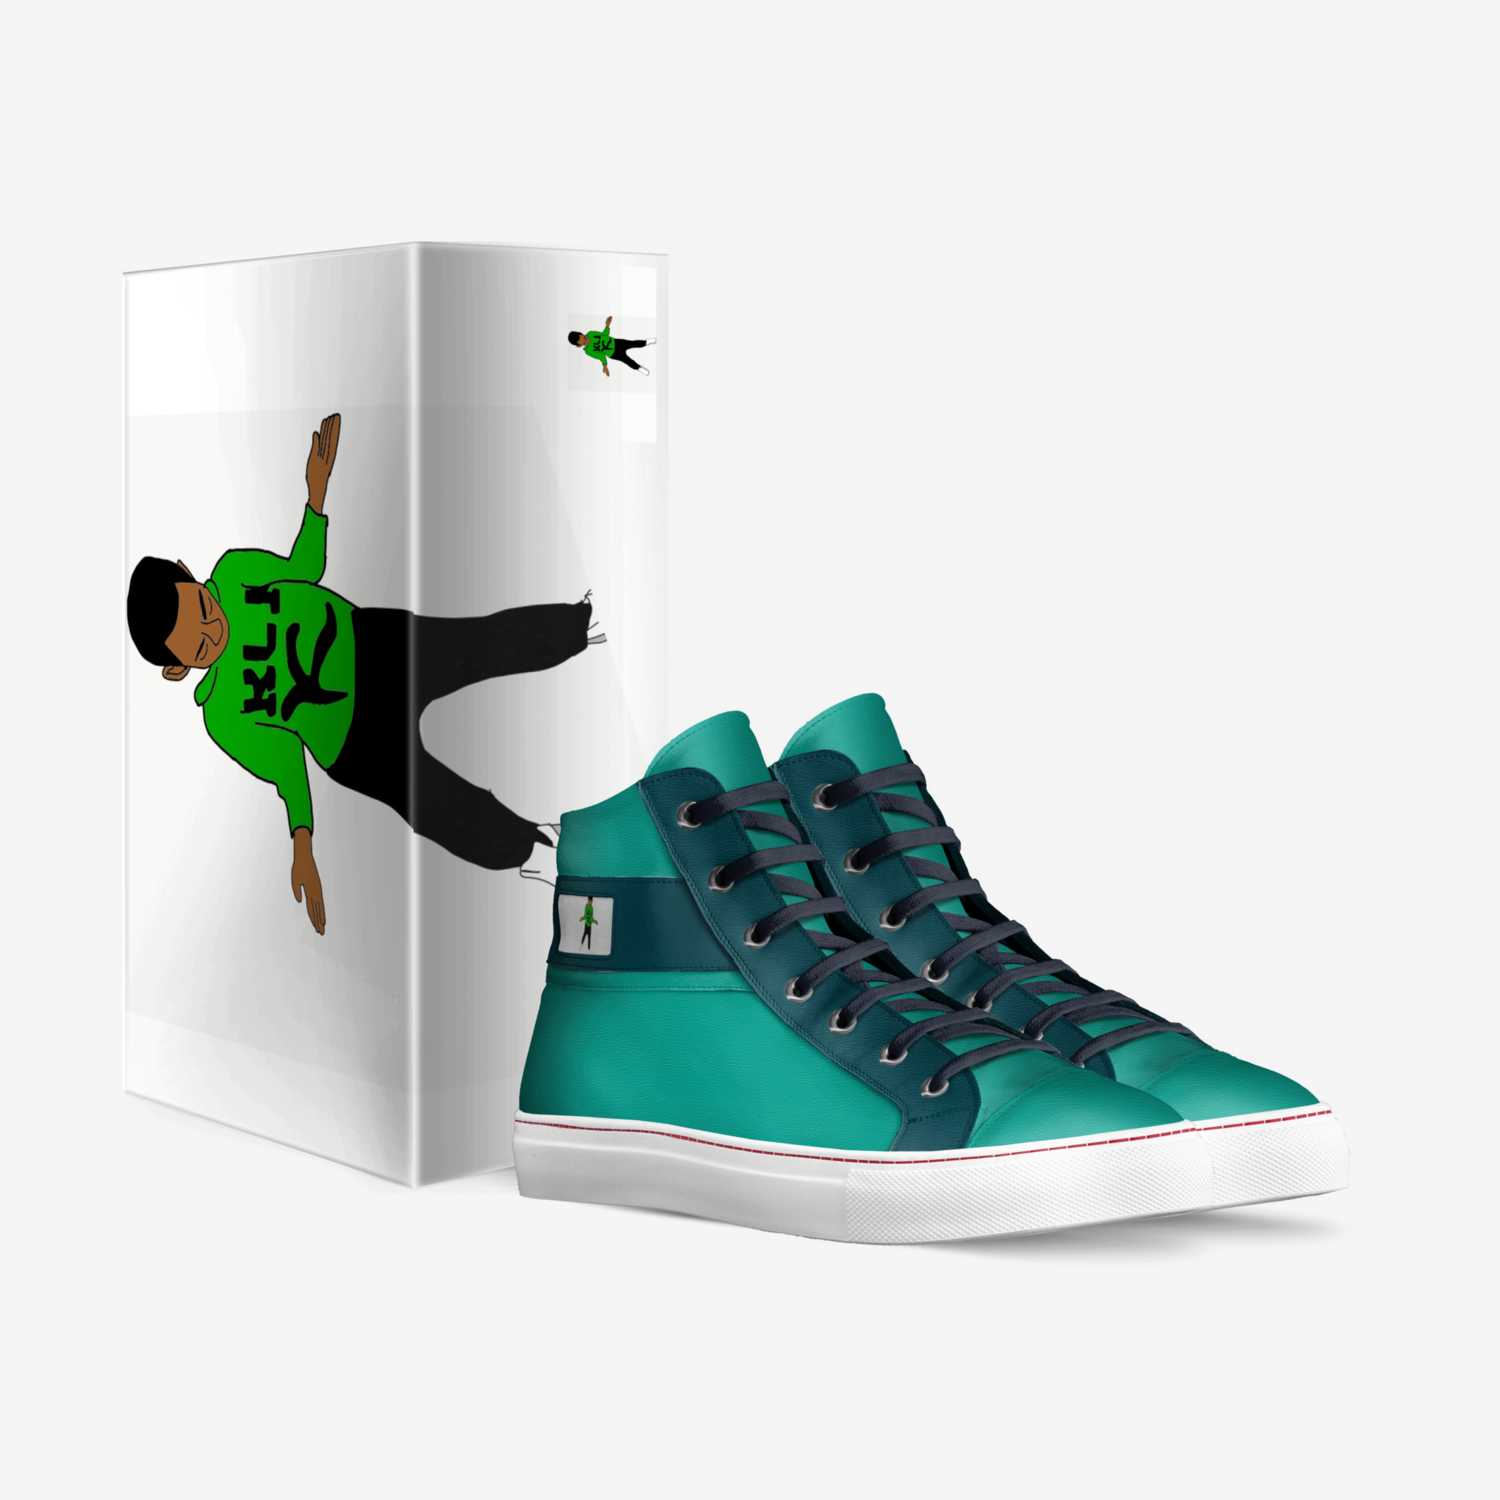 Kazys custom made in Italy shoes by Klkazy Thomas | Box view